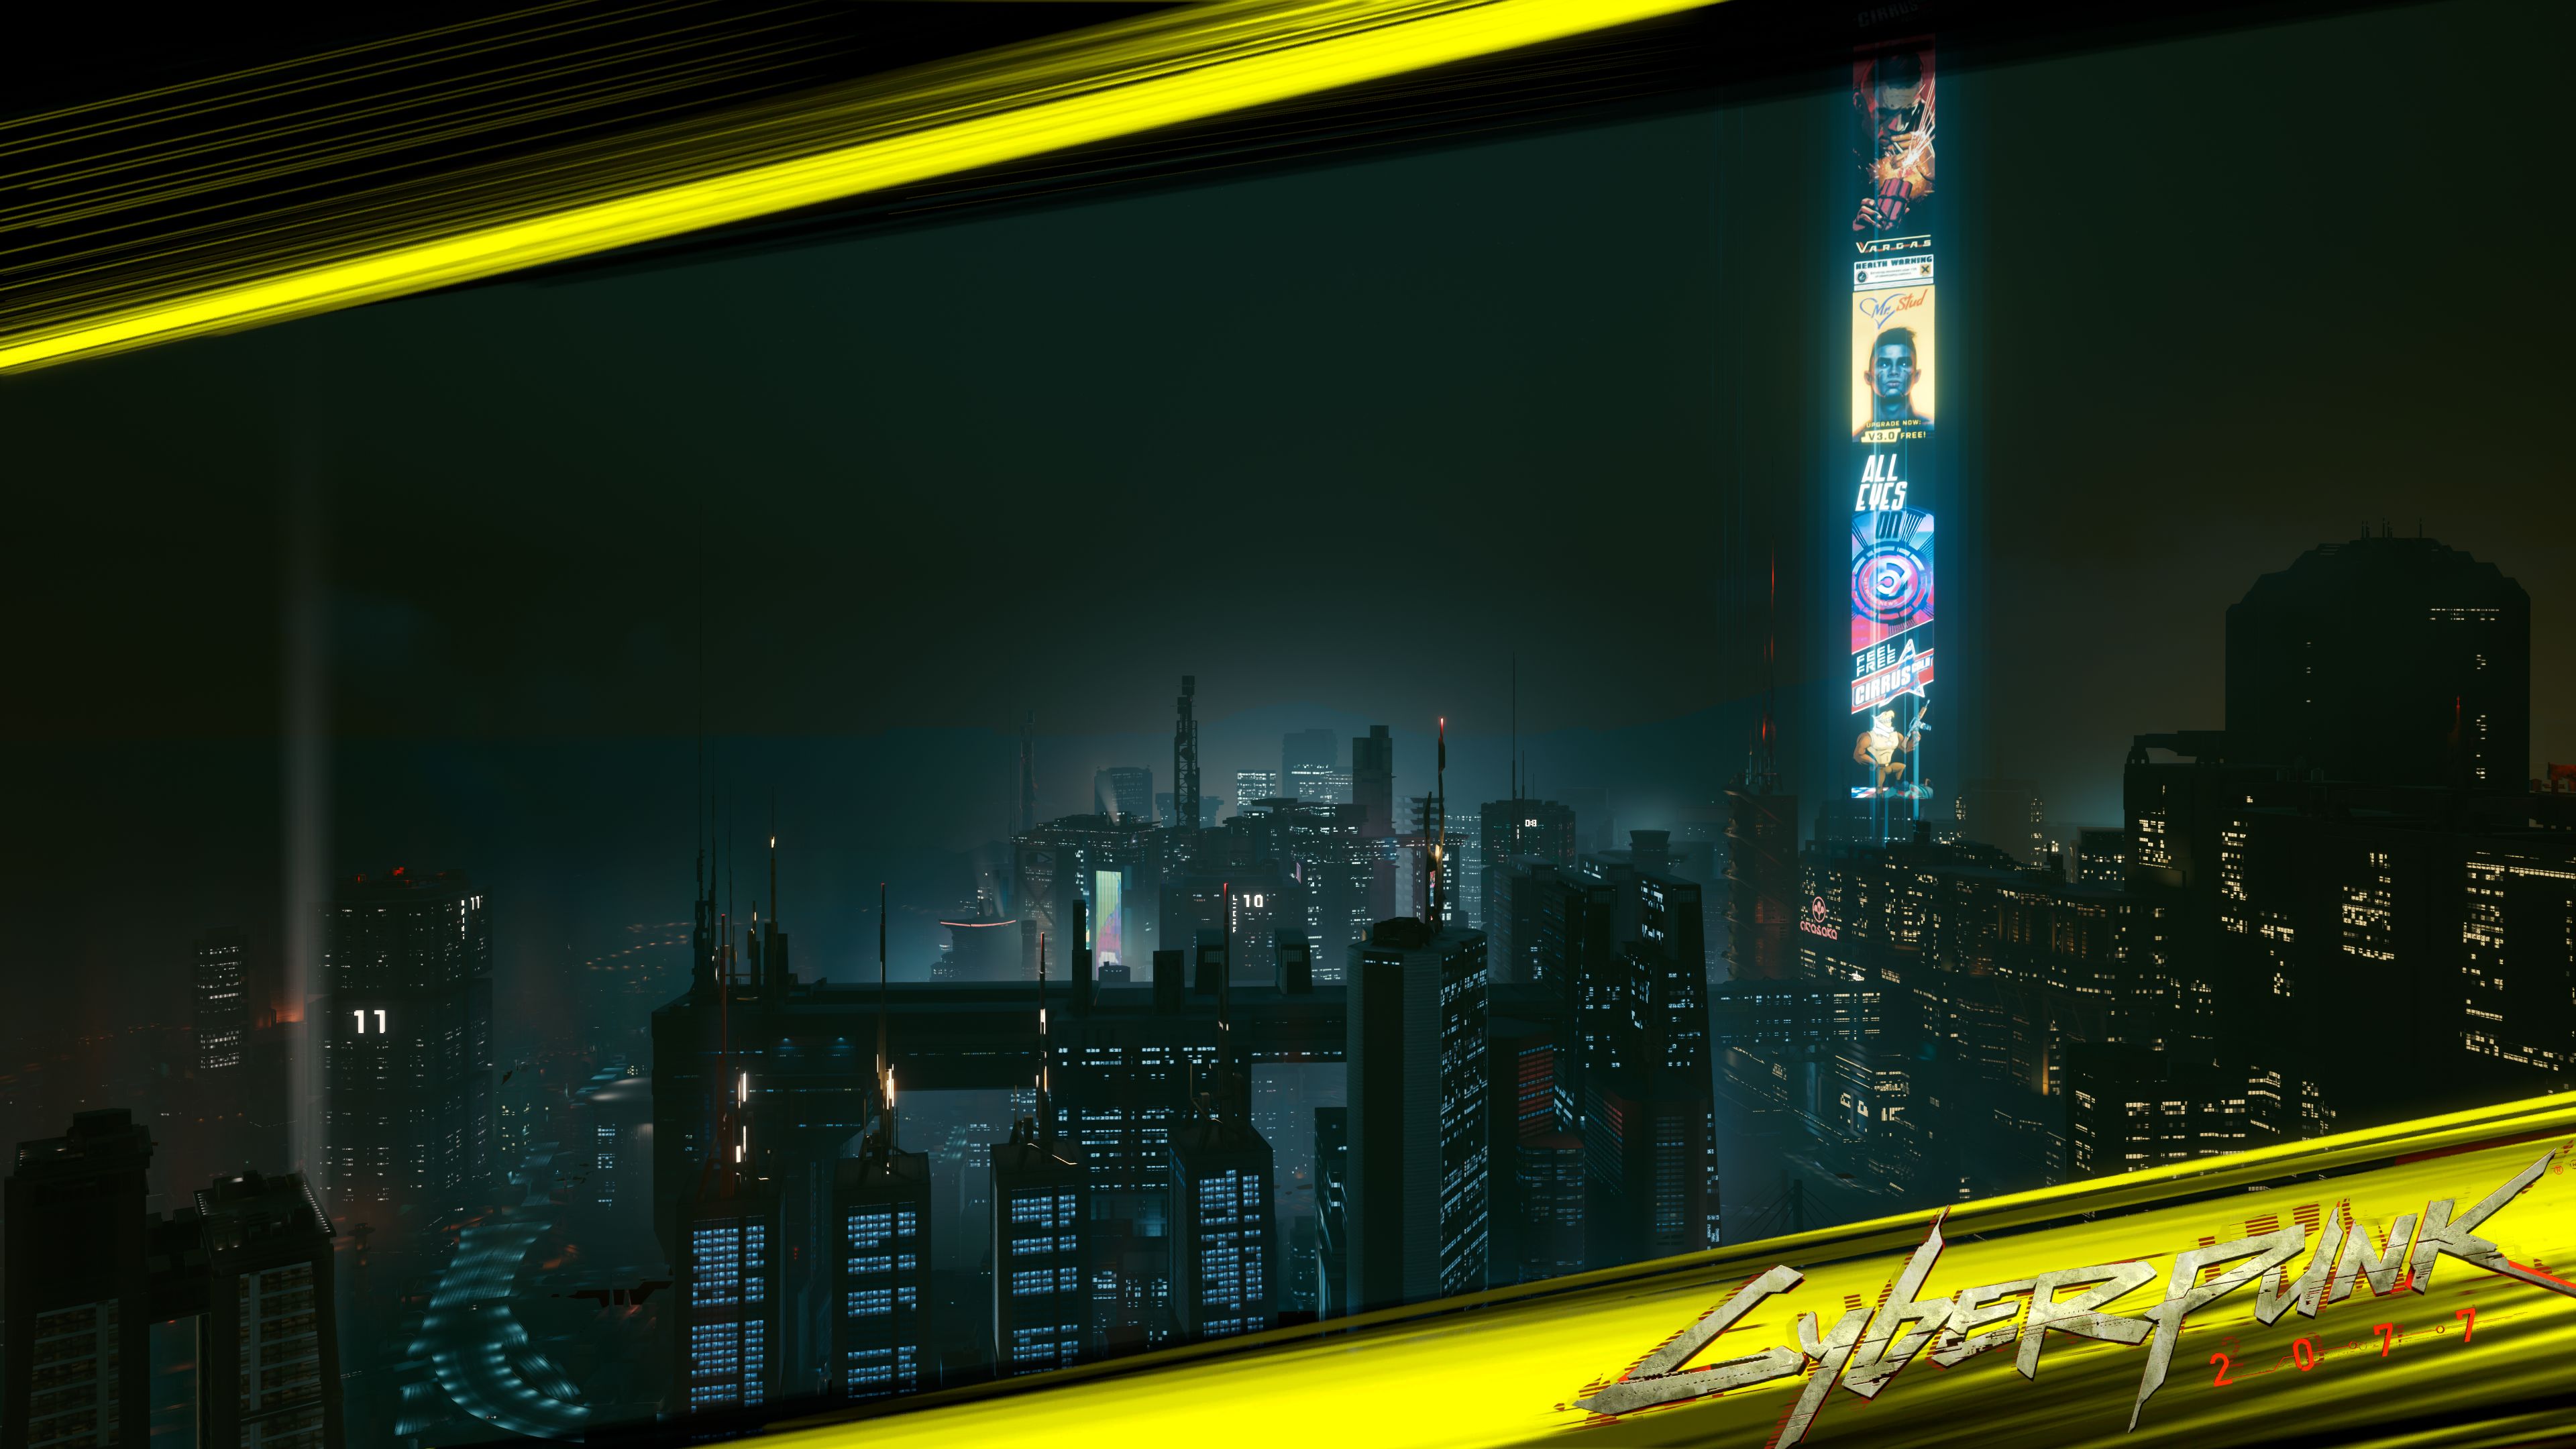 cyberpunk 2077, night city (cyberpunk 2077), video game